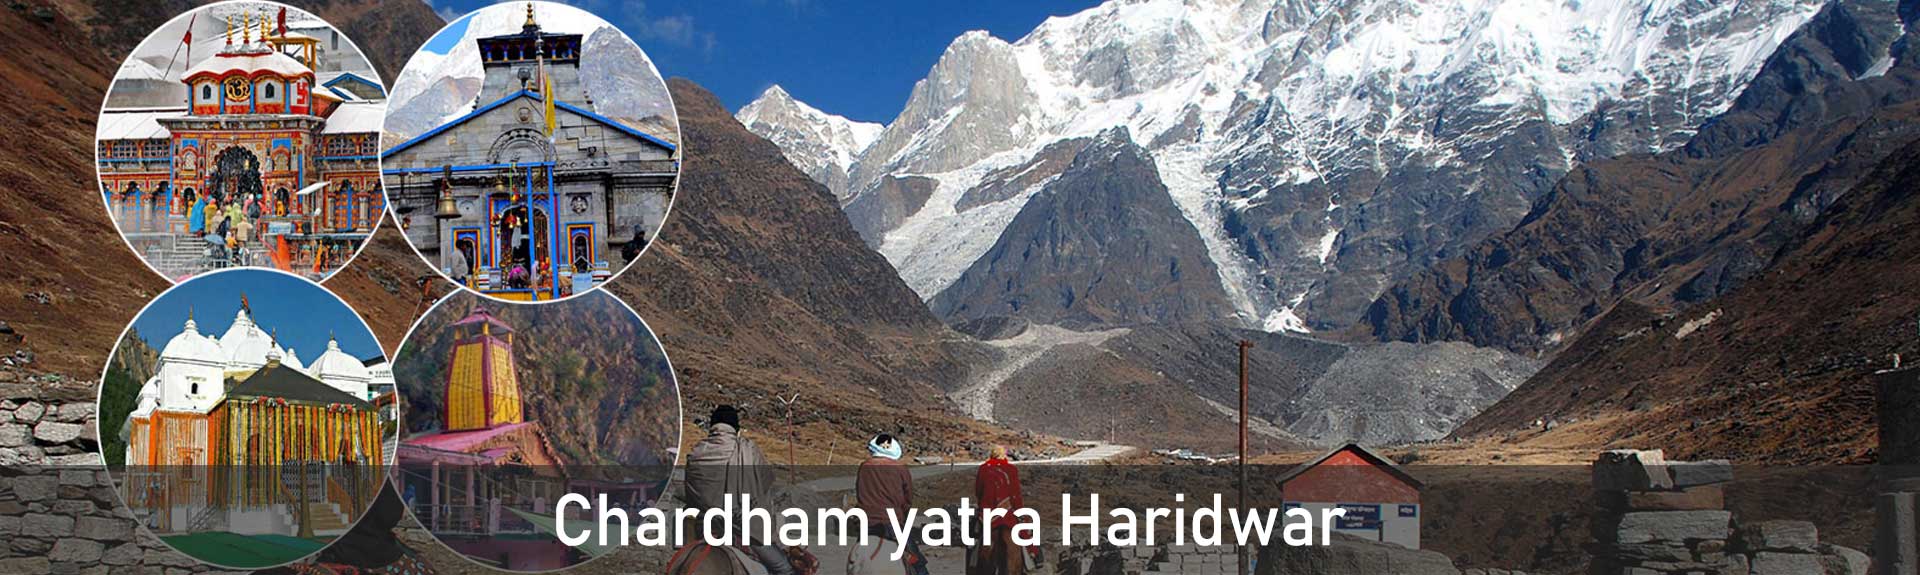 Chardham yatra Haridwar